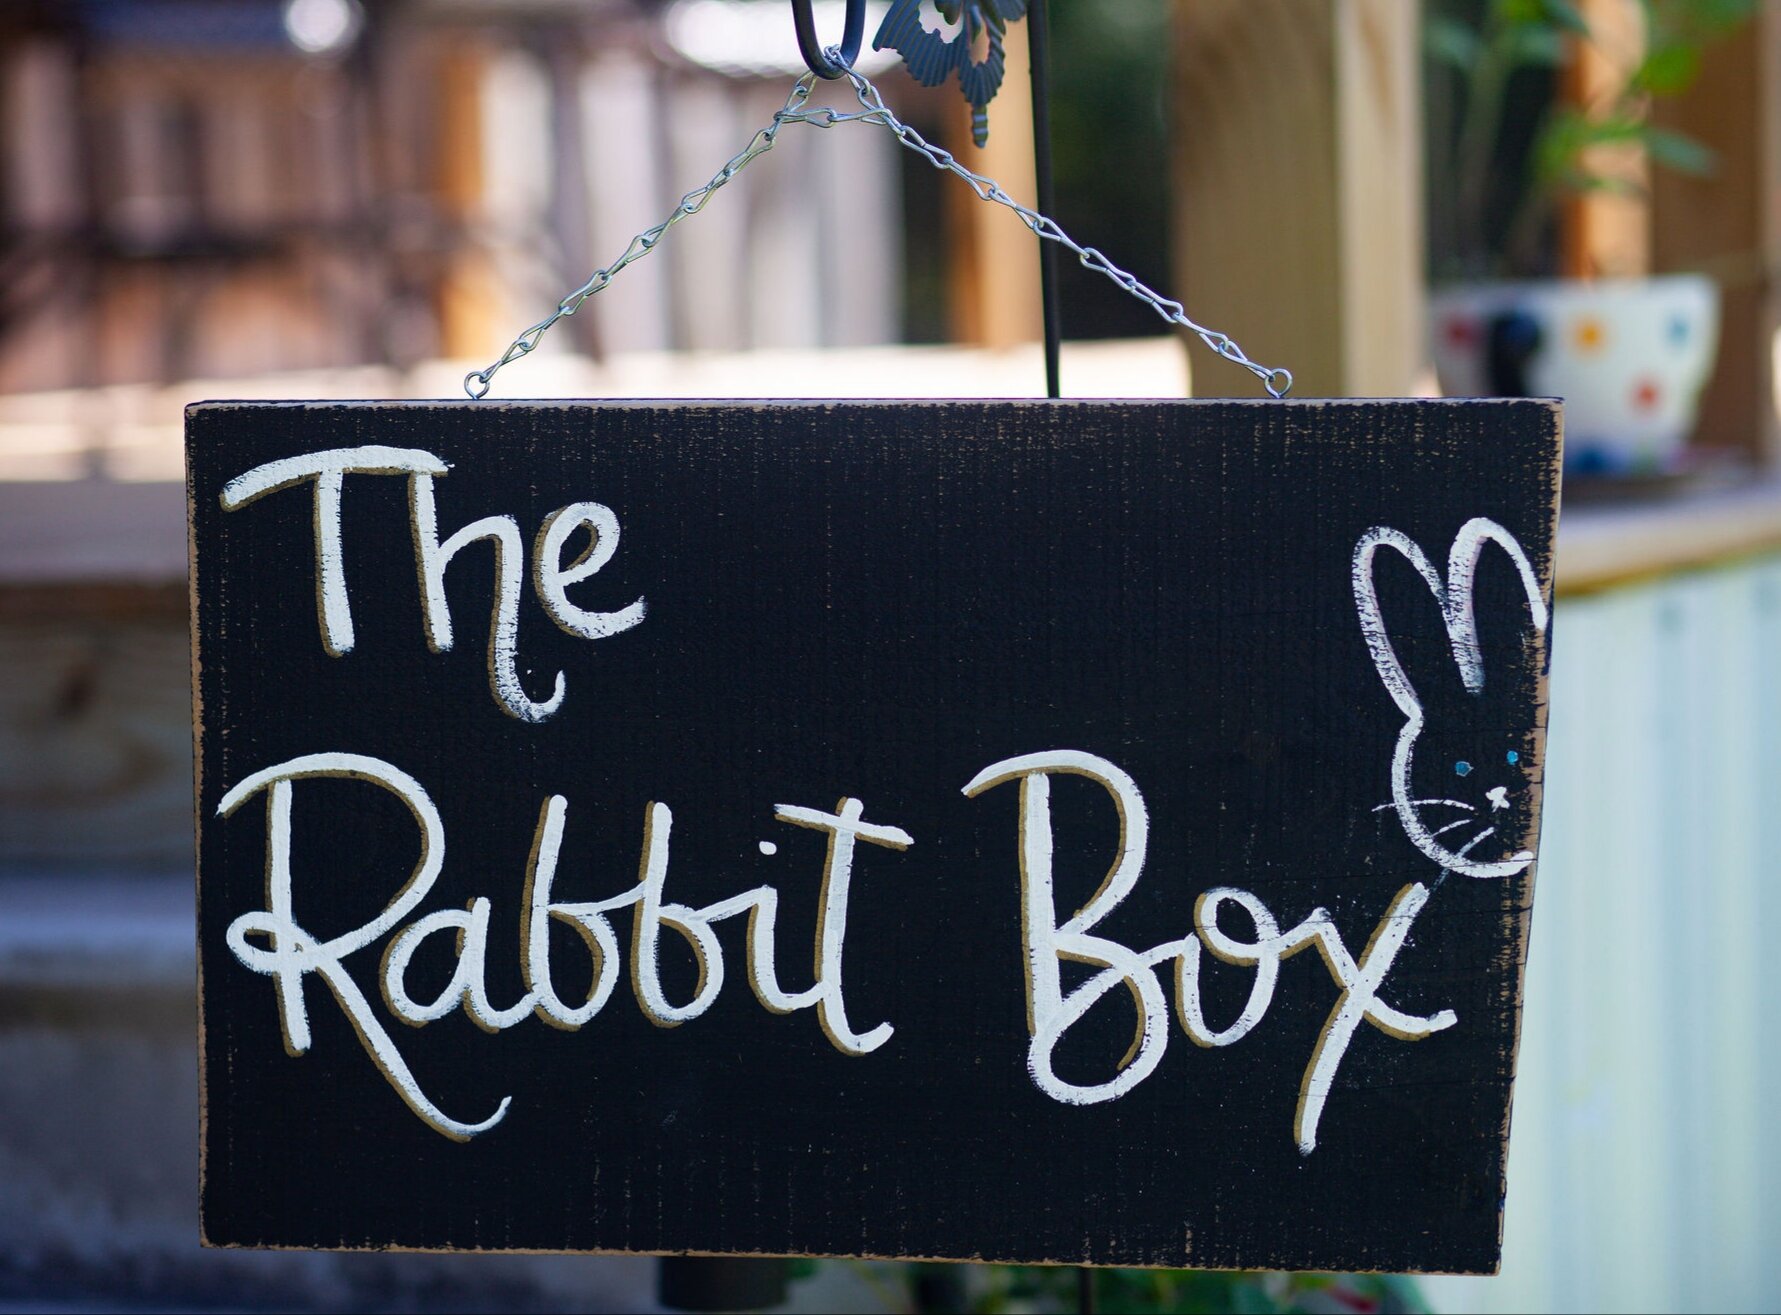 Rabbit Box sign